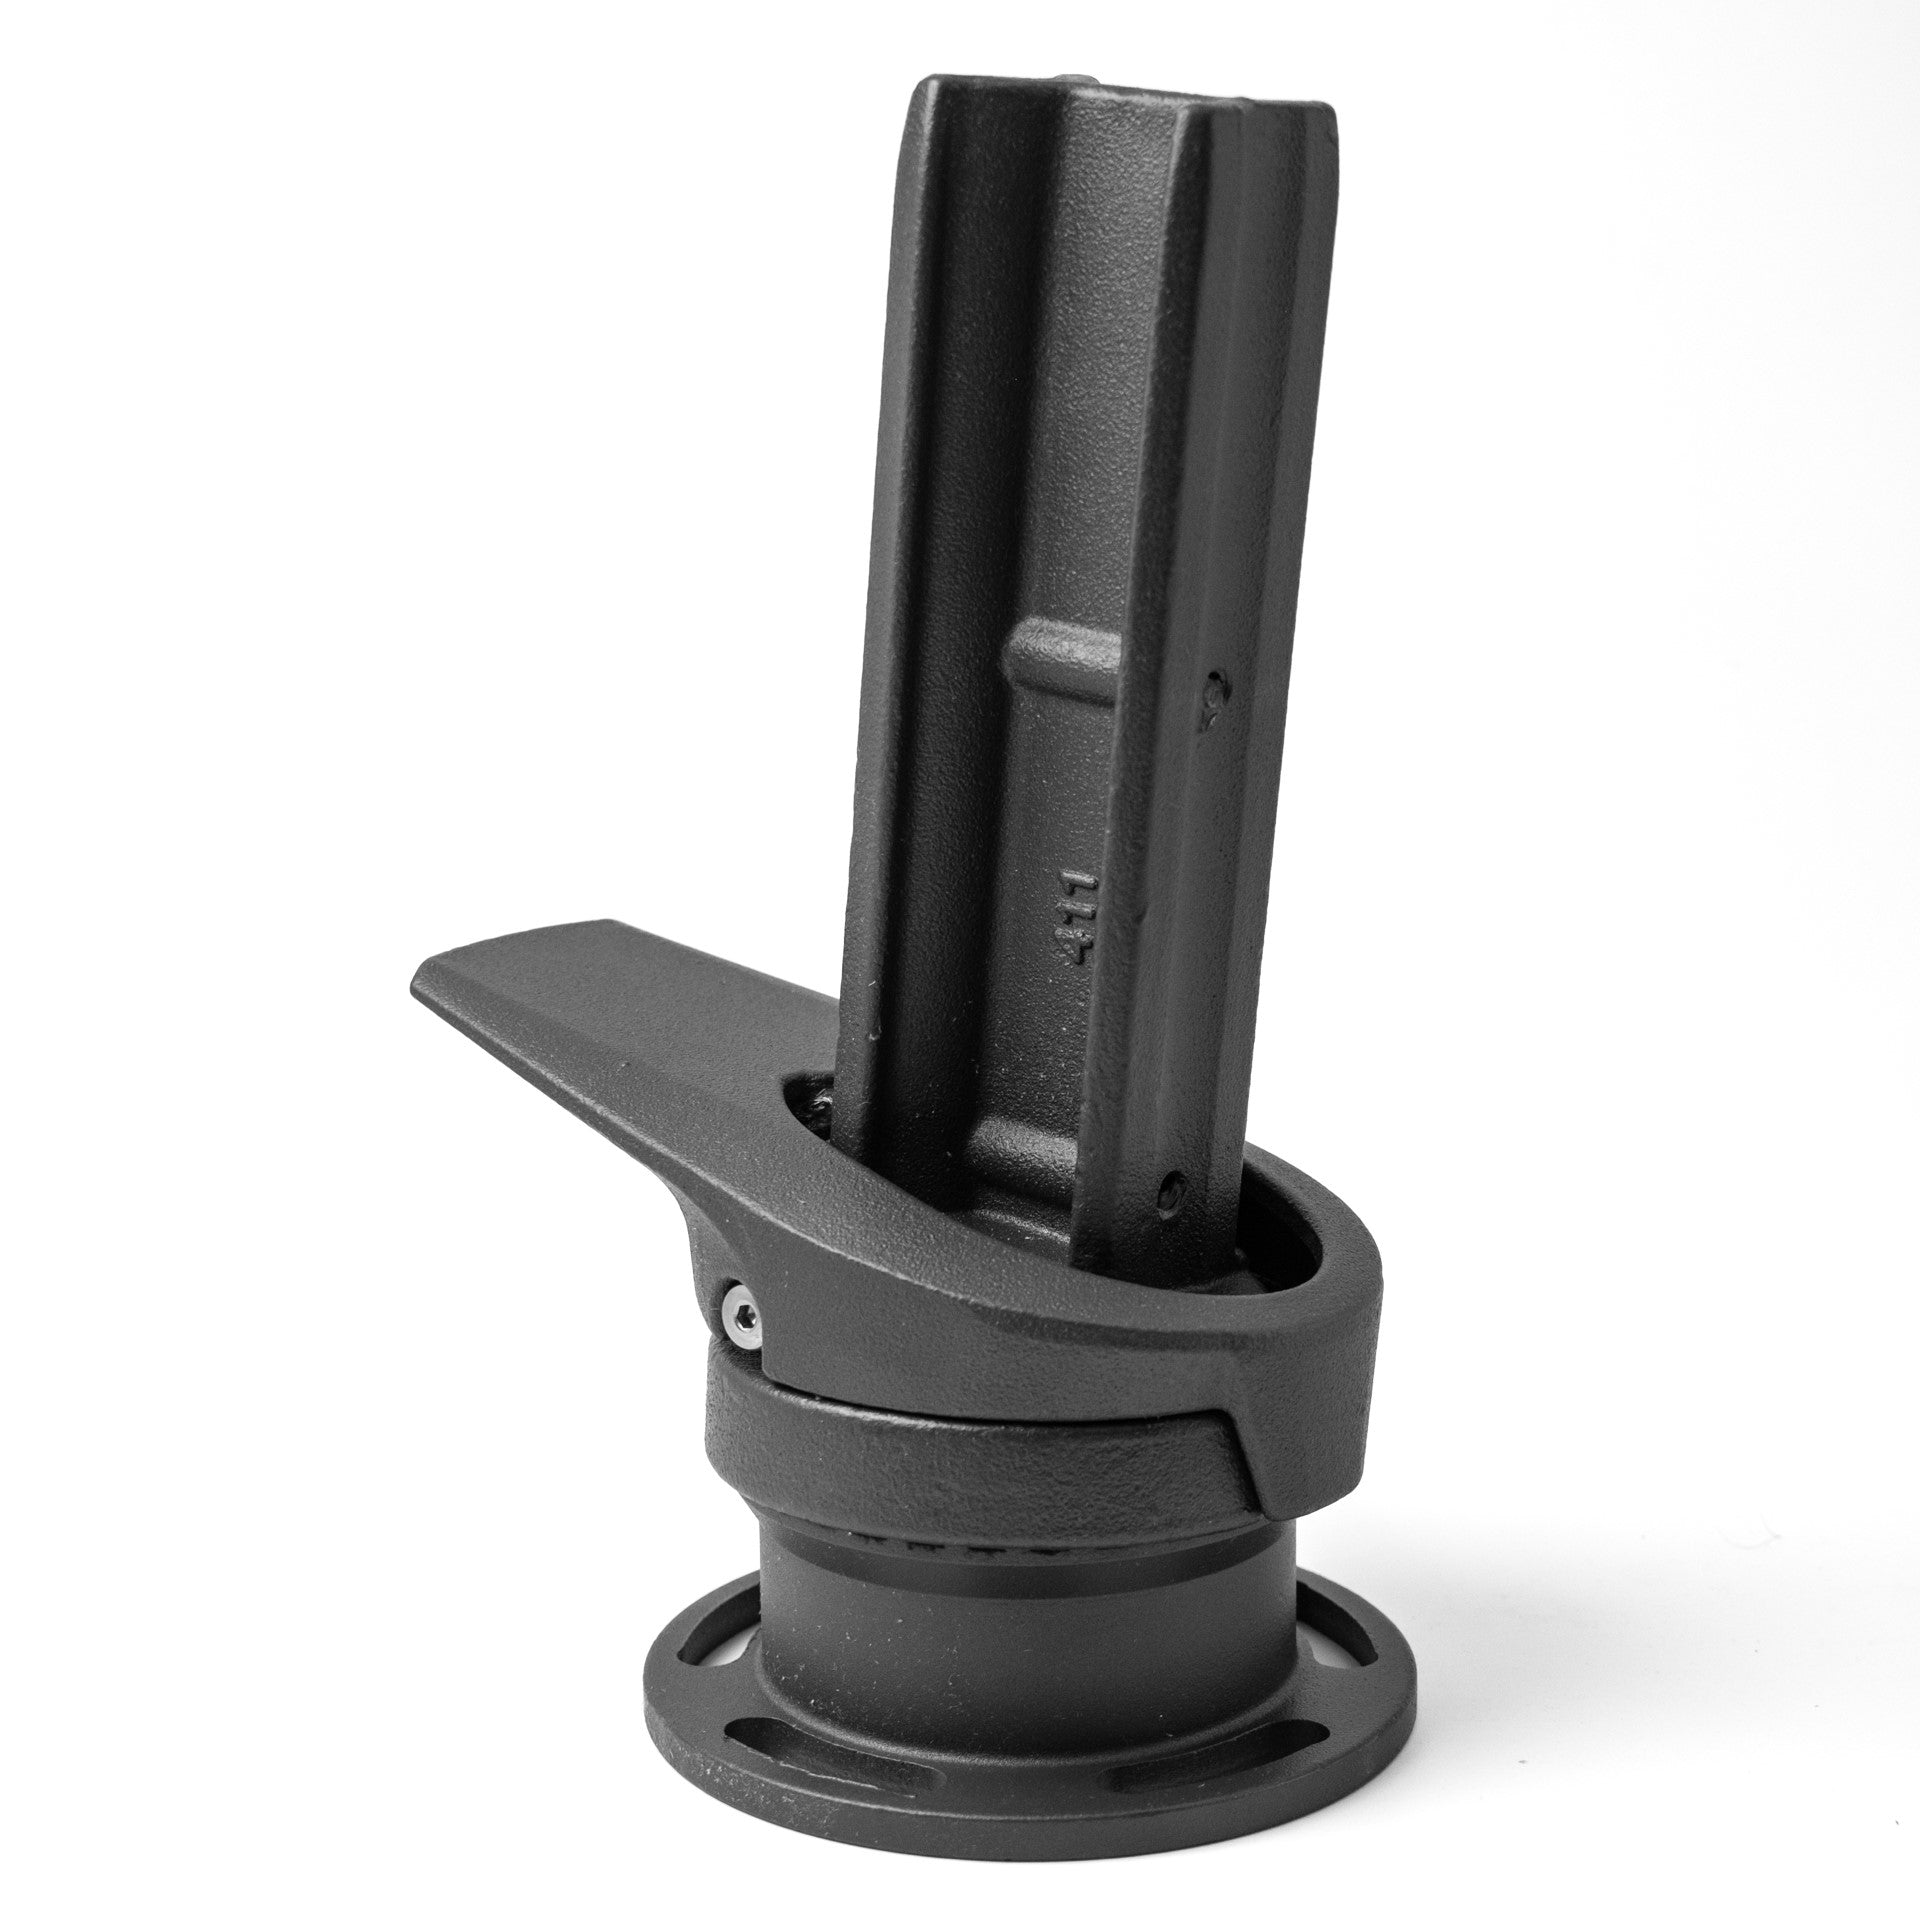 TG, 360 Rotating Hub for AKZP Cantilever Umbrella, Black Finish Outdoor Umbrella & Sunshade Accessories 12042020